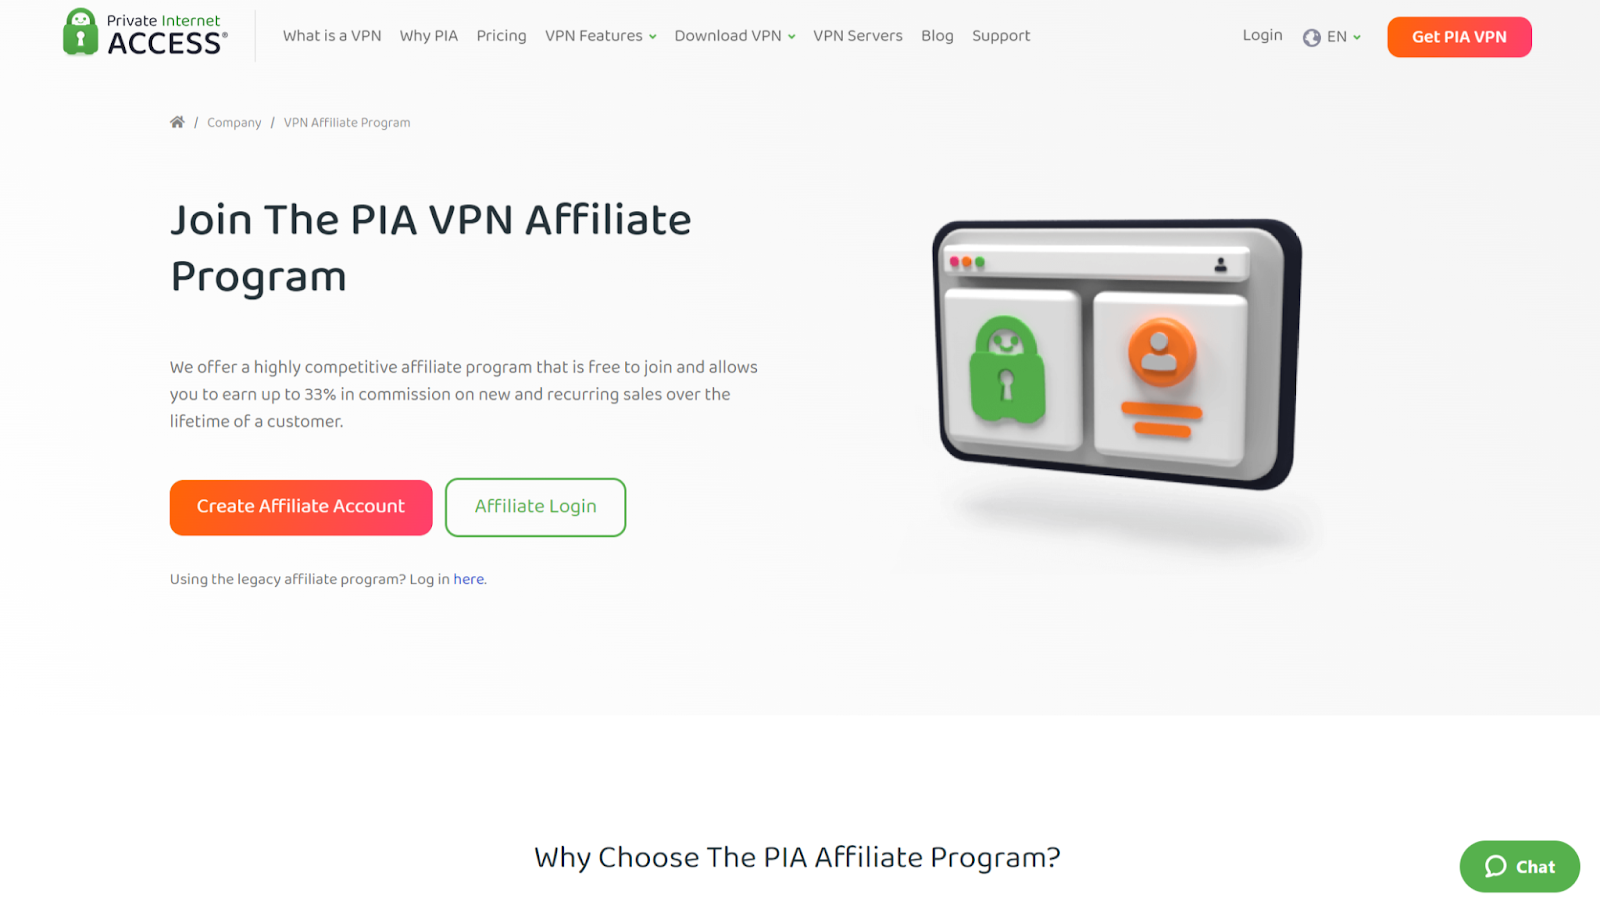 Private internet access affiliate program